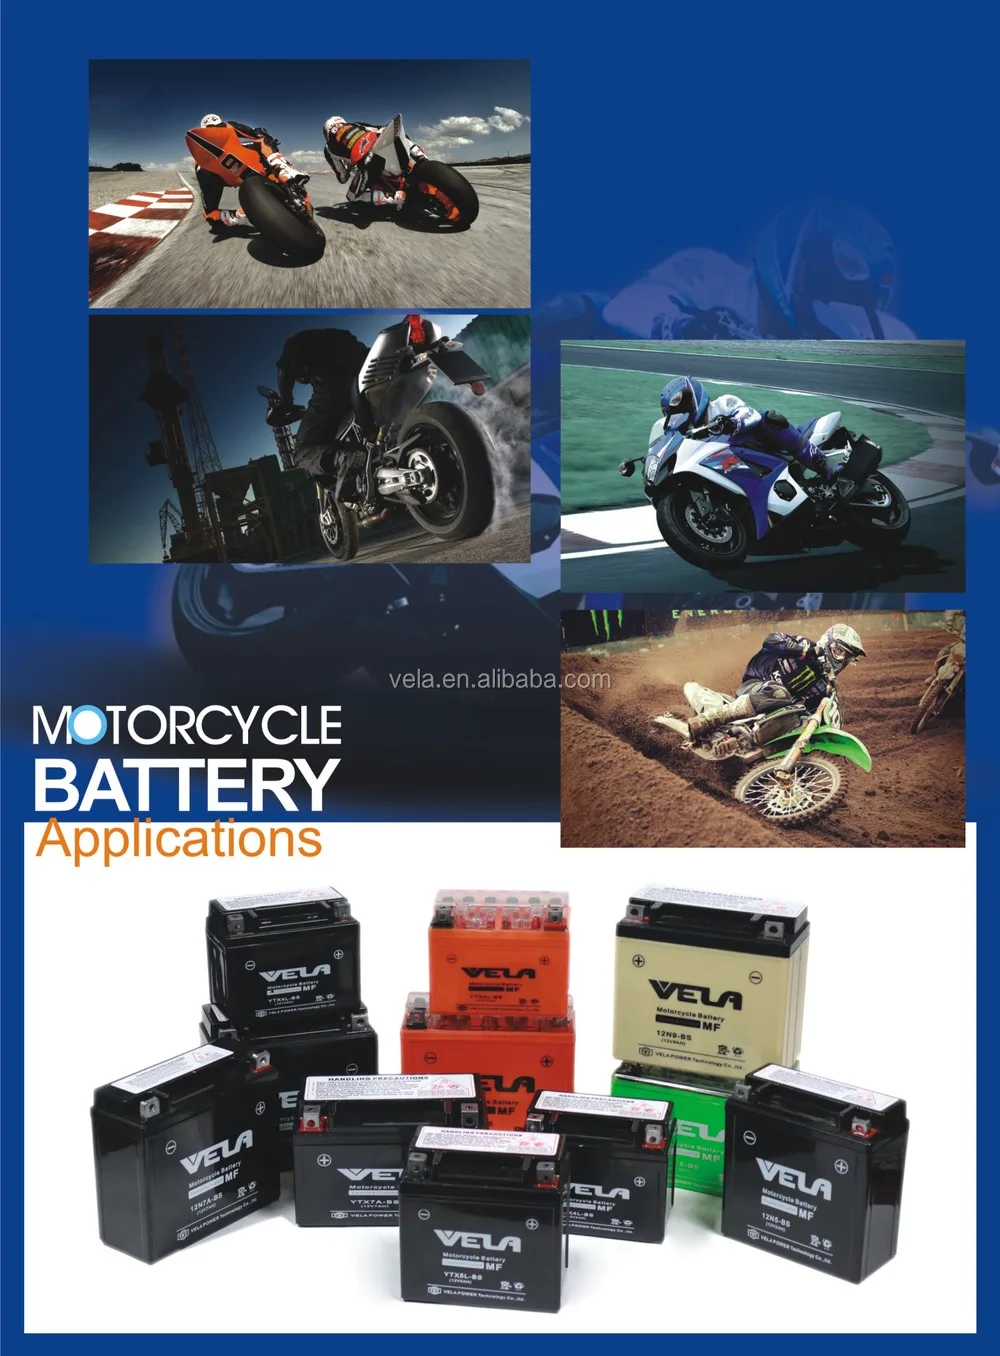 MOTORCYCLE BATTERY CATALOGUE(VELA)-2